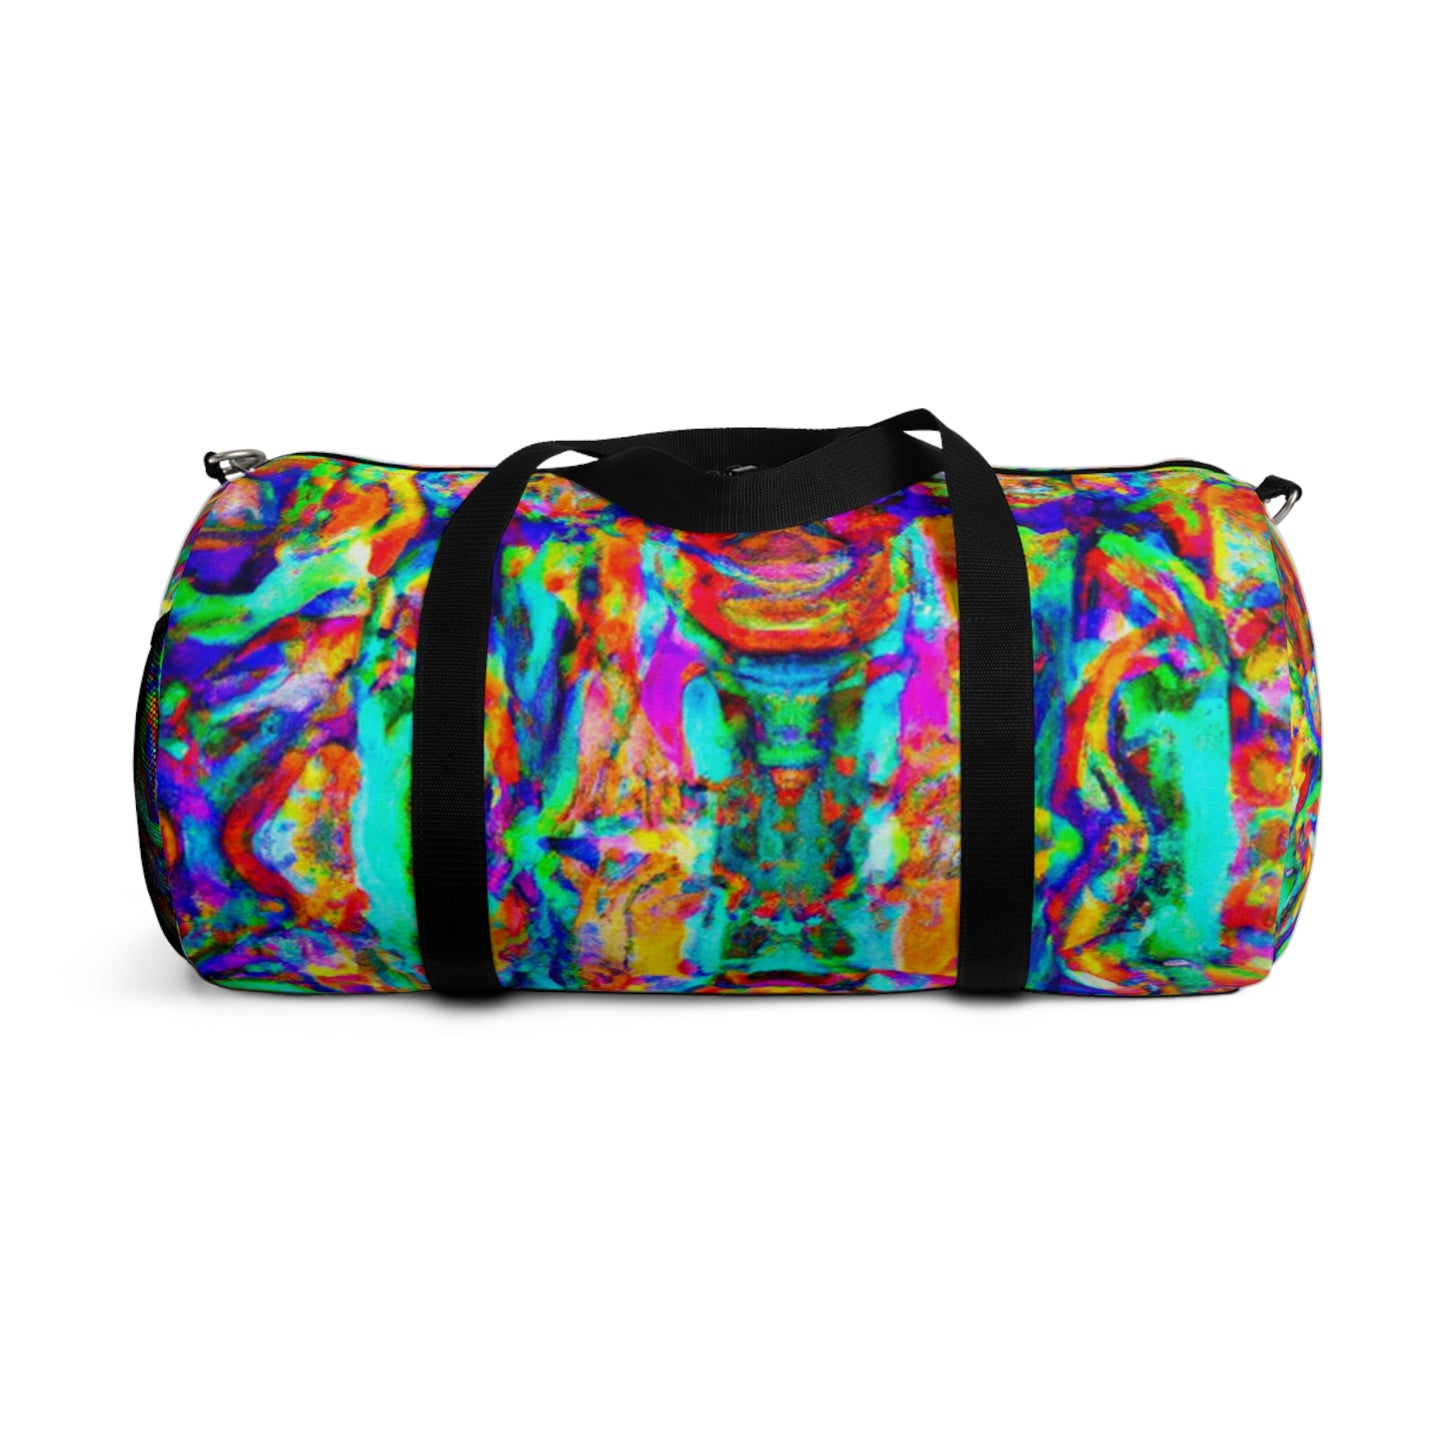 Clairette - Psychedelic Duffel Bag